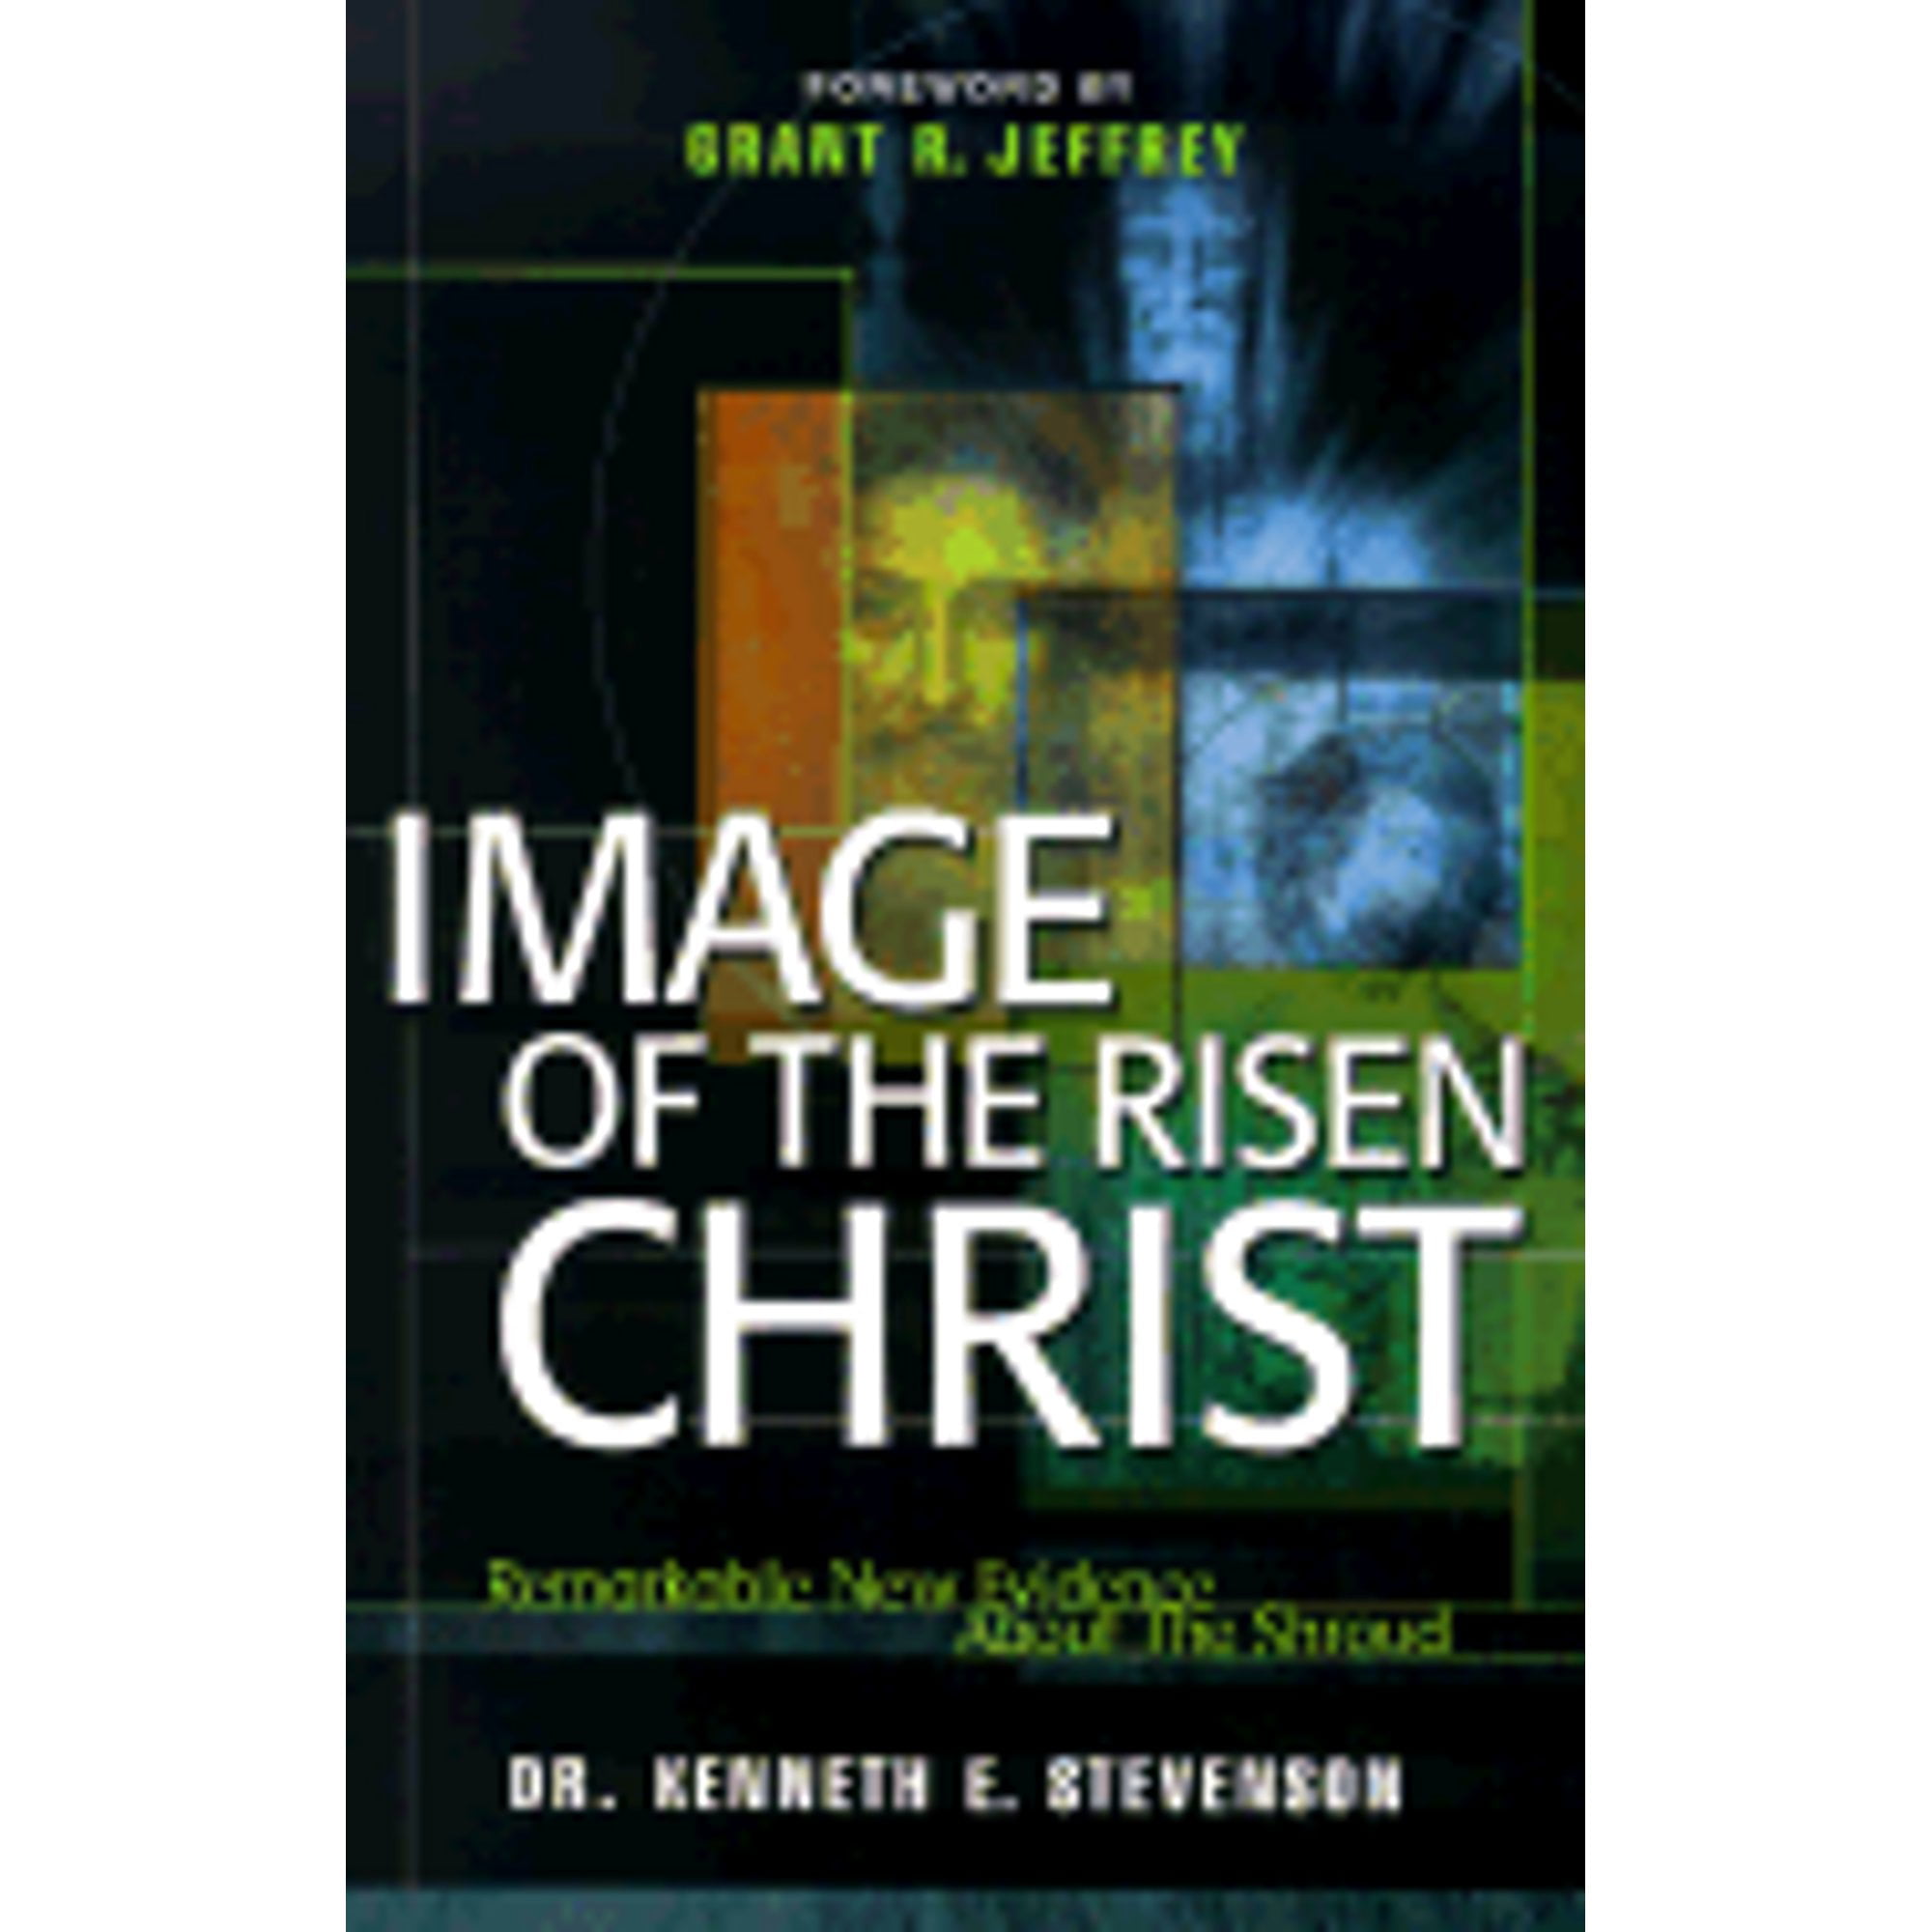 Pre-Owned Image of the Risen Christ (Paperback 9780921714583) by Dr. Kenneth E Stevenson, Grant R Jeffrey